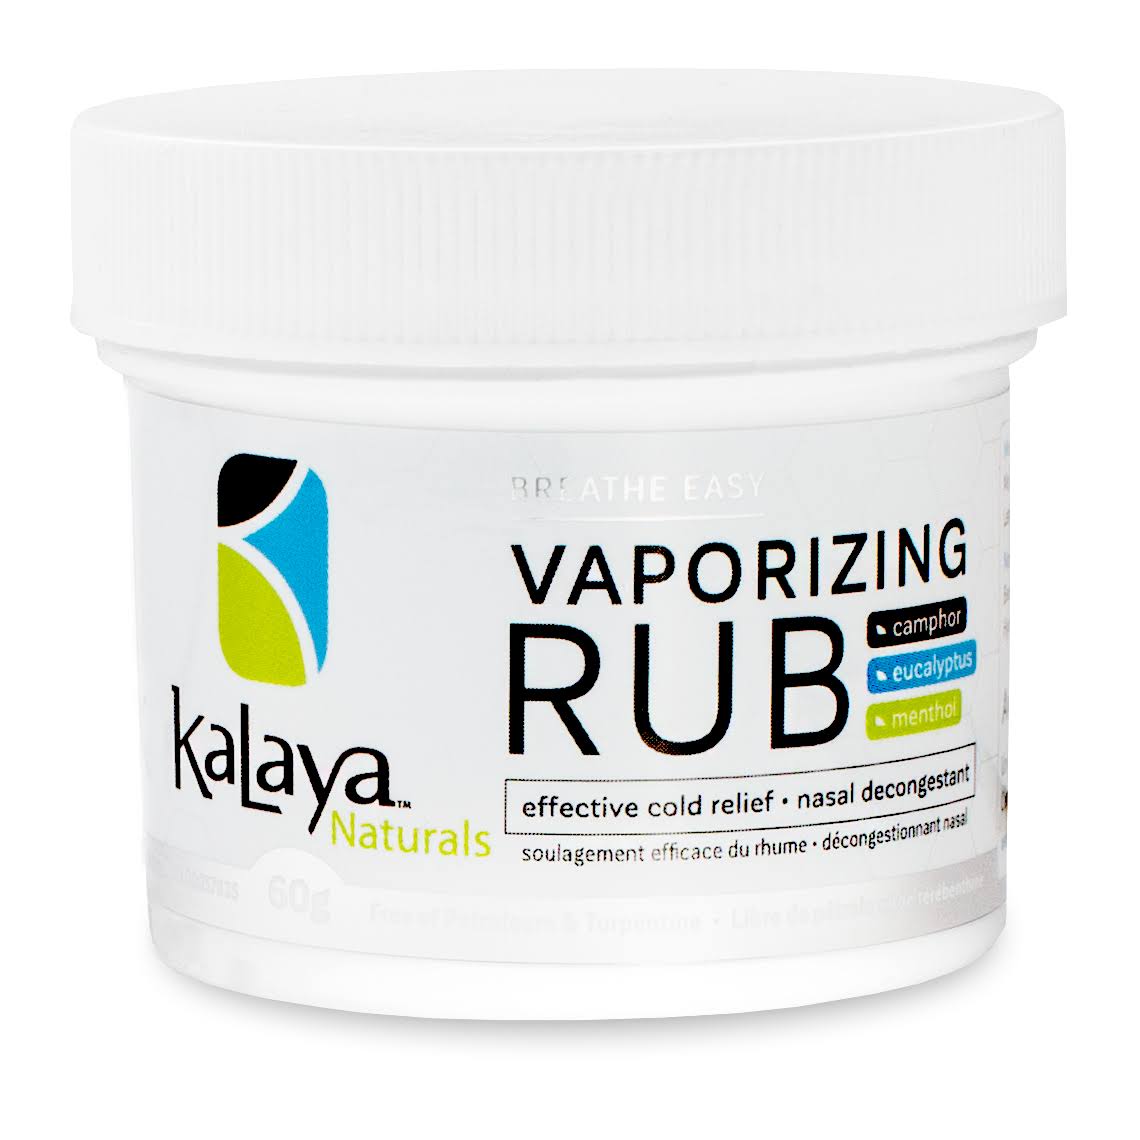 Kalaya Naturals Breathe Easy vaporizing Rub - 60g